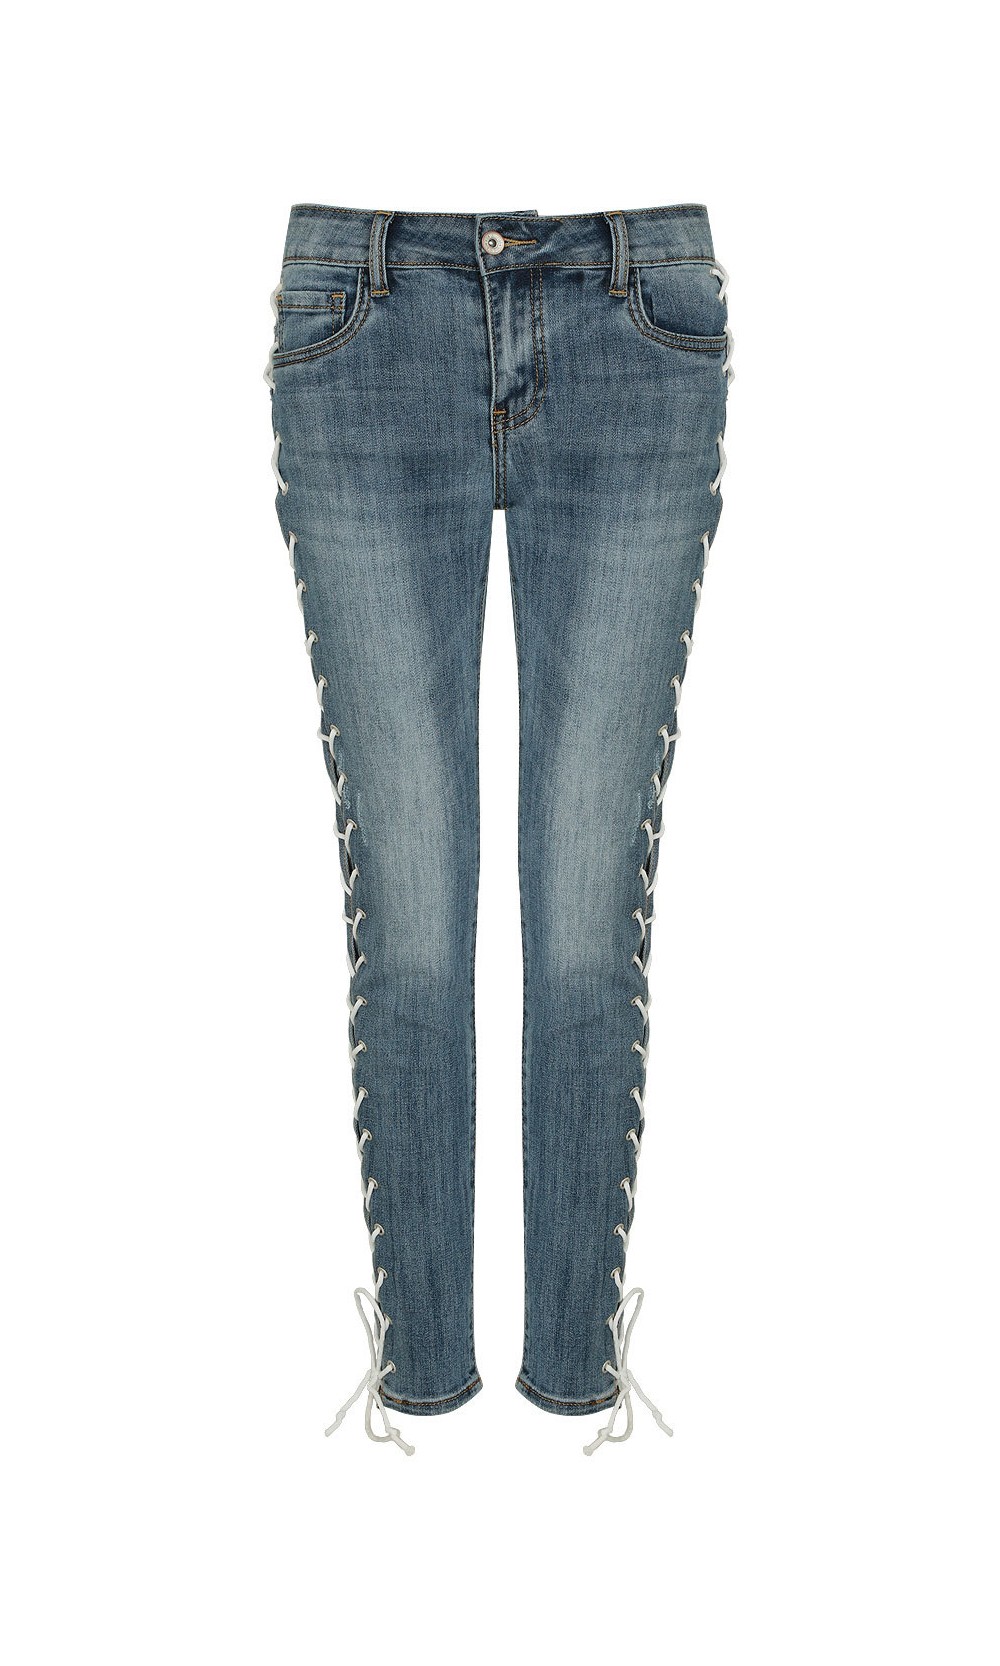 Lincoln Outfitters Denim Blue Jean Capri Pants Size 12 | eBay